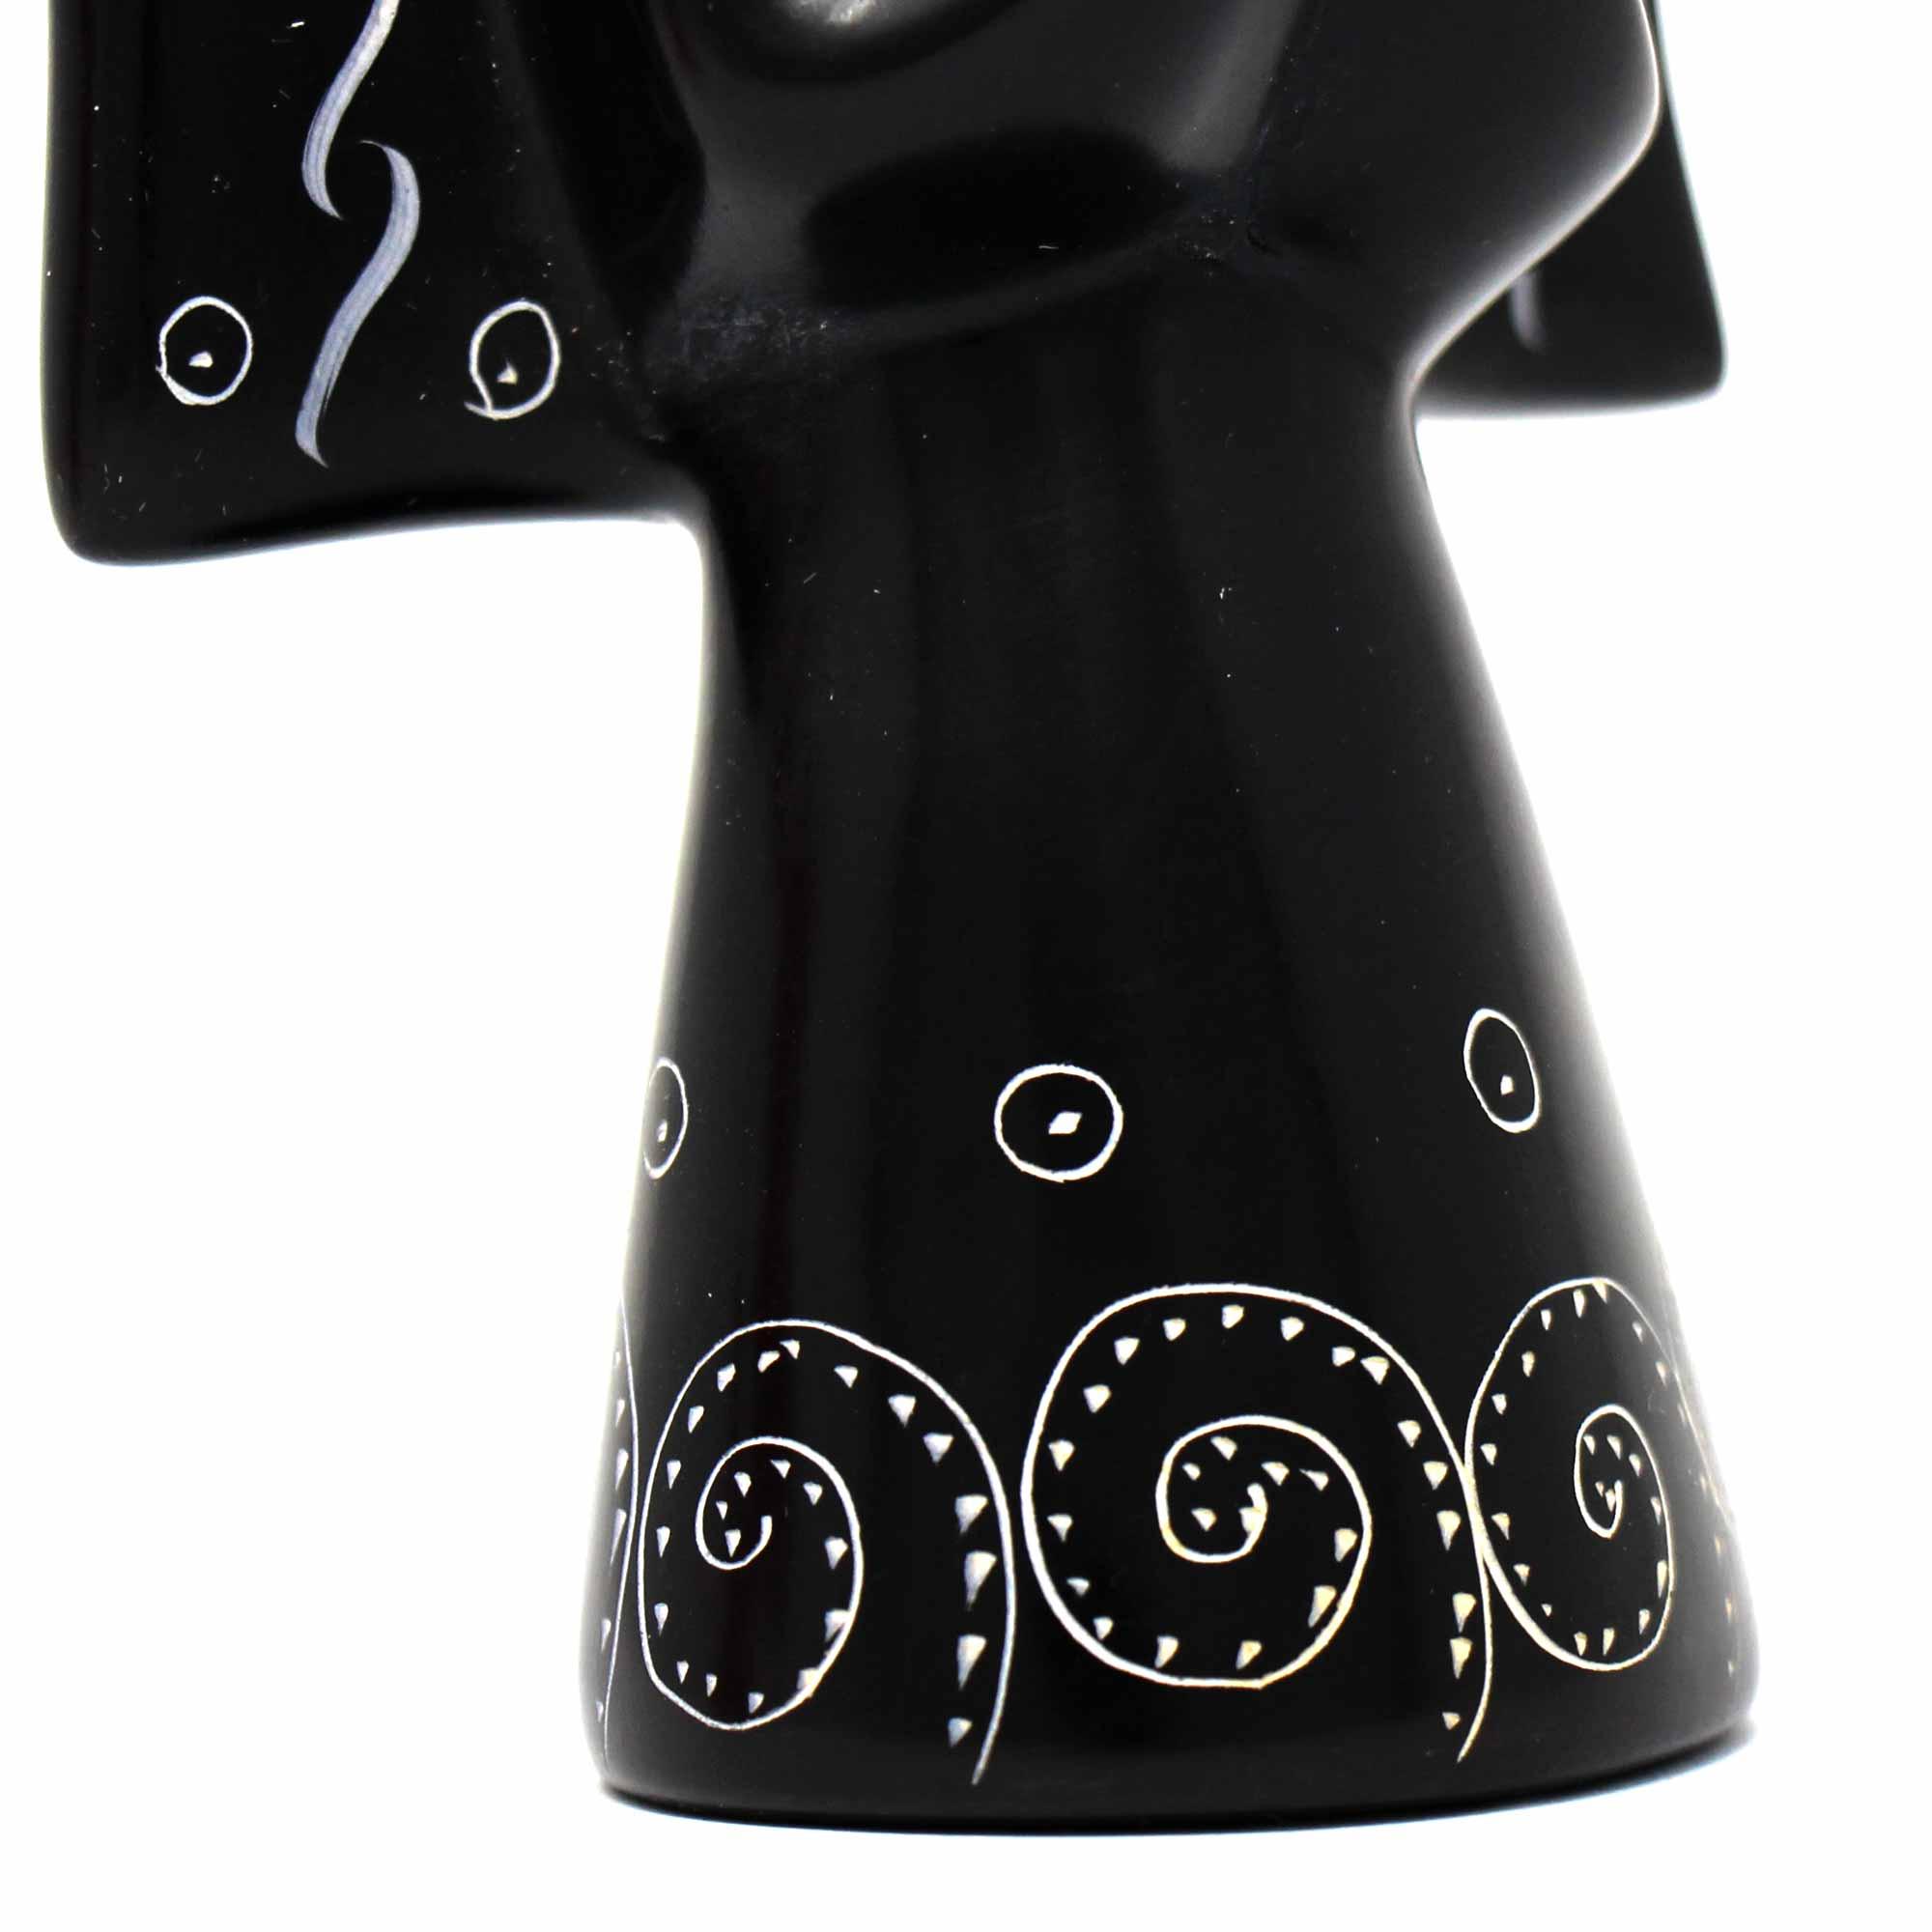 Soapstone Angel Sculpture - Black Finish with Etch Design - Flyclothing LLC